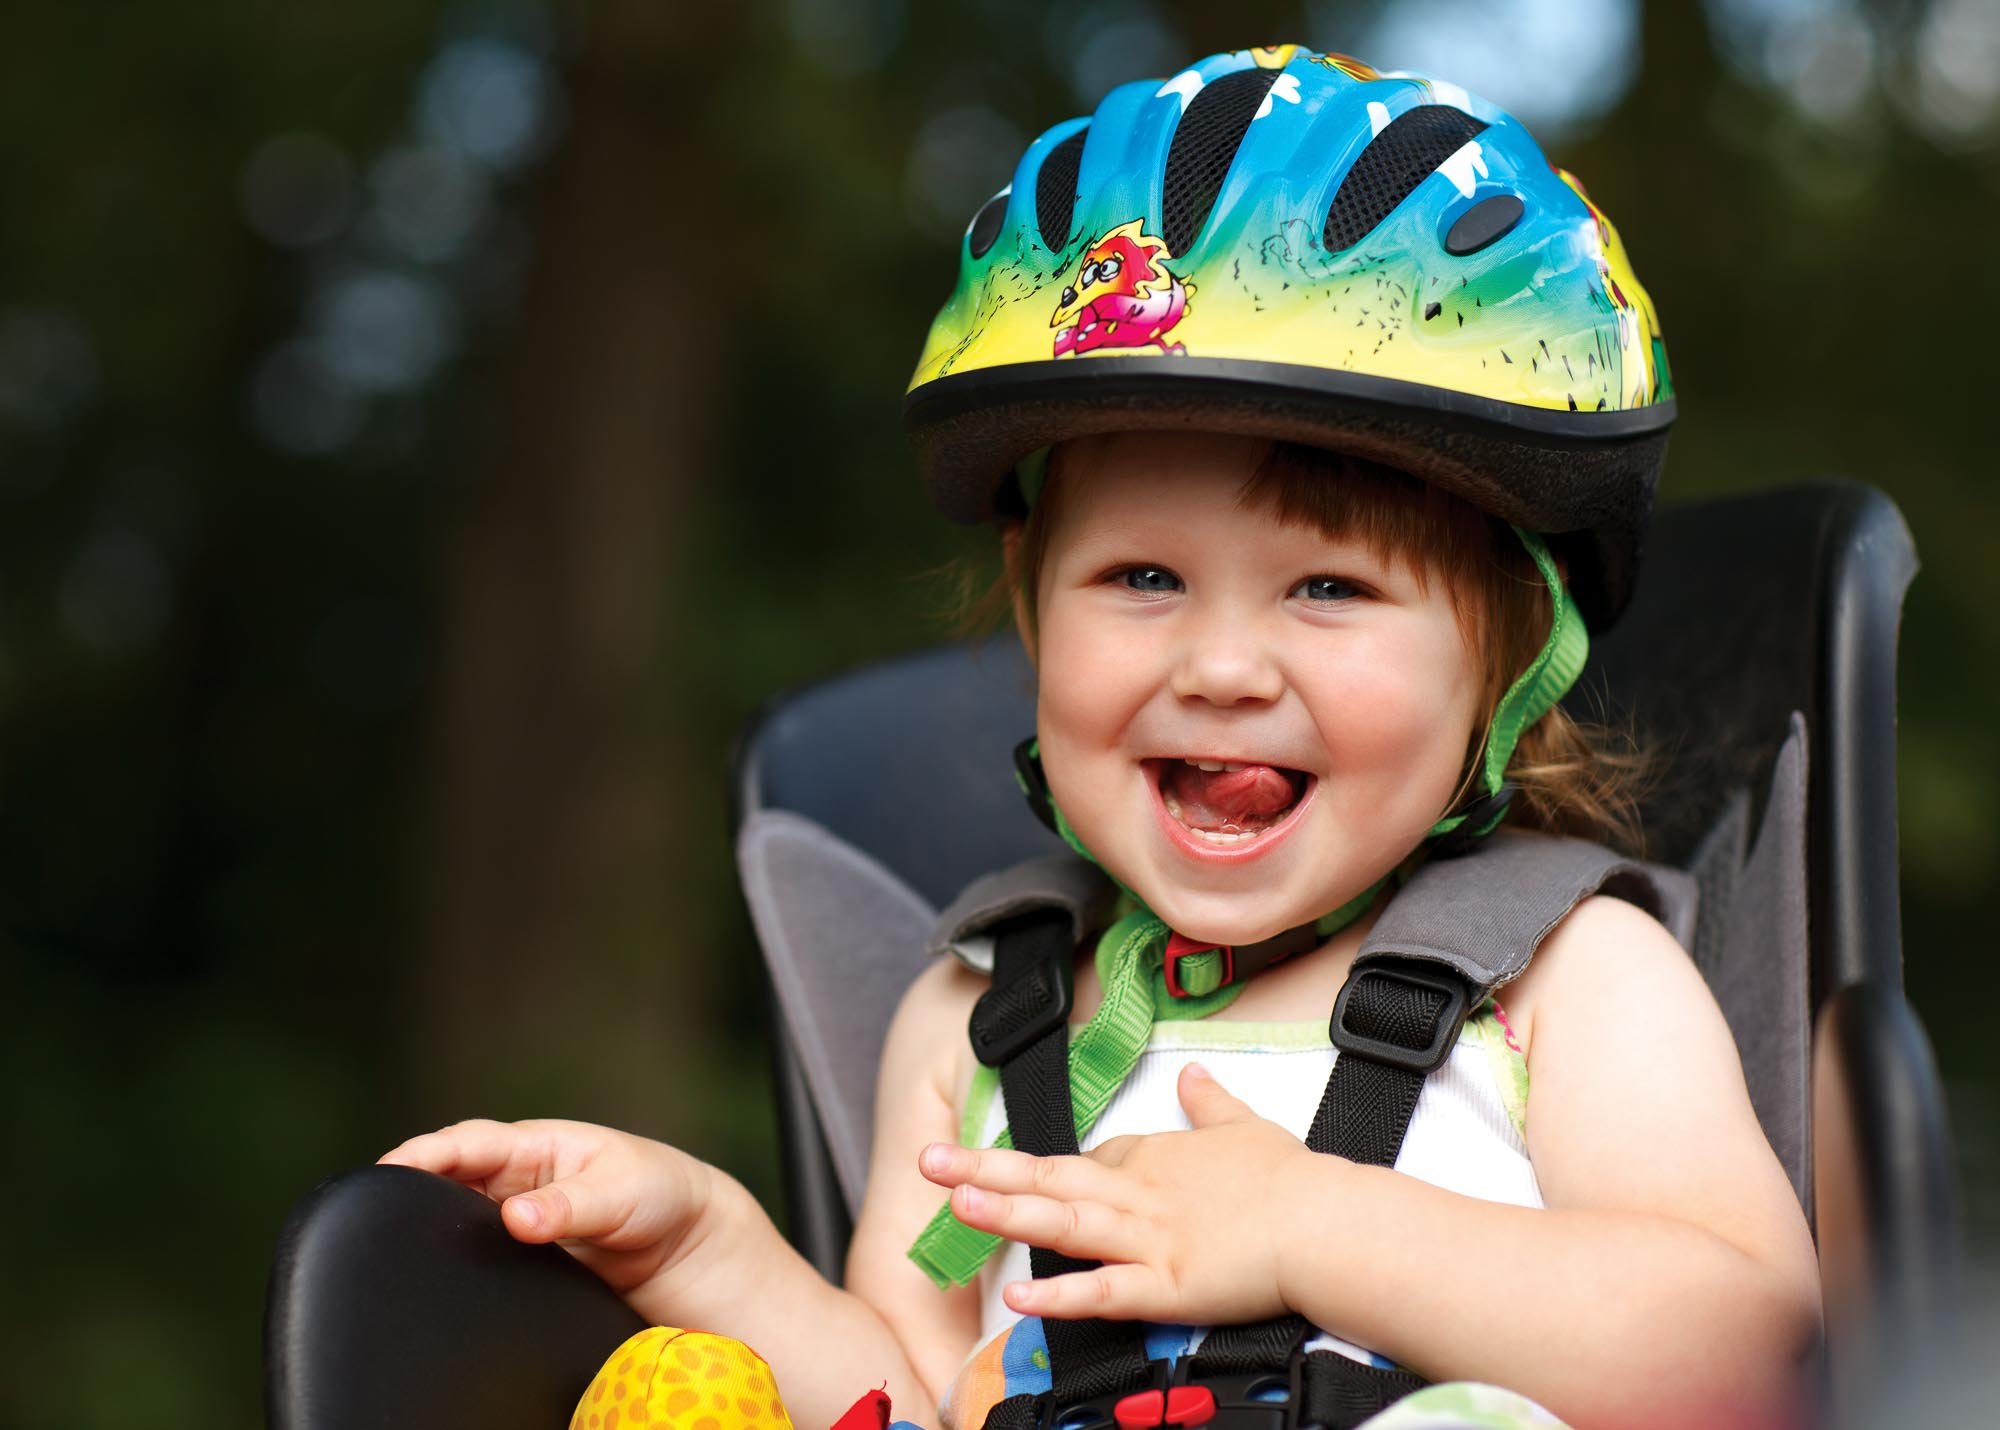 Smiling girl sitting on a bike seat wearing a helmet.